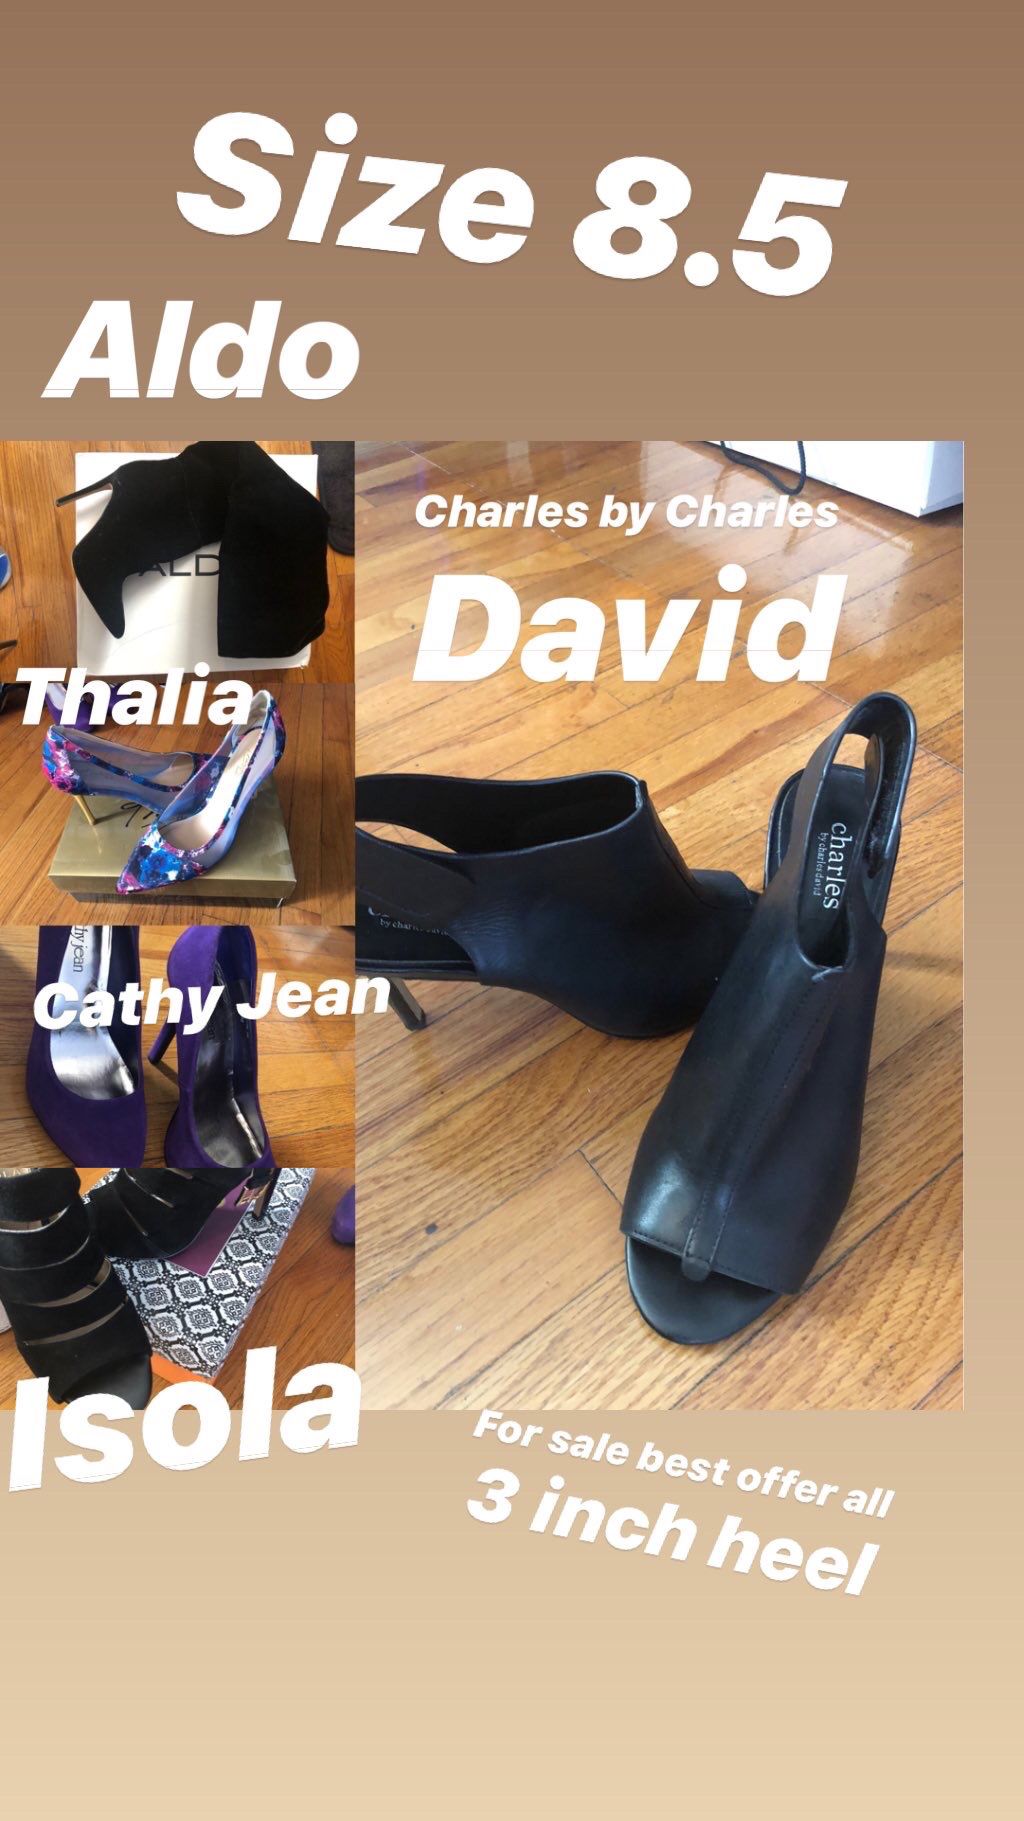 3 inch heels size 8.5